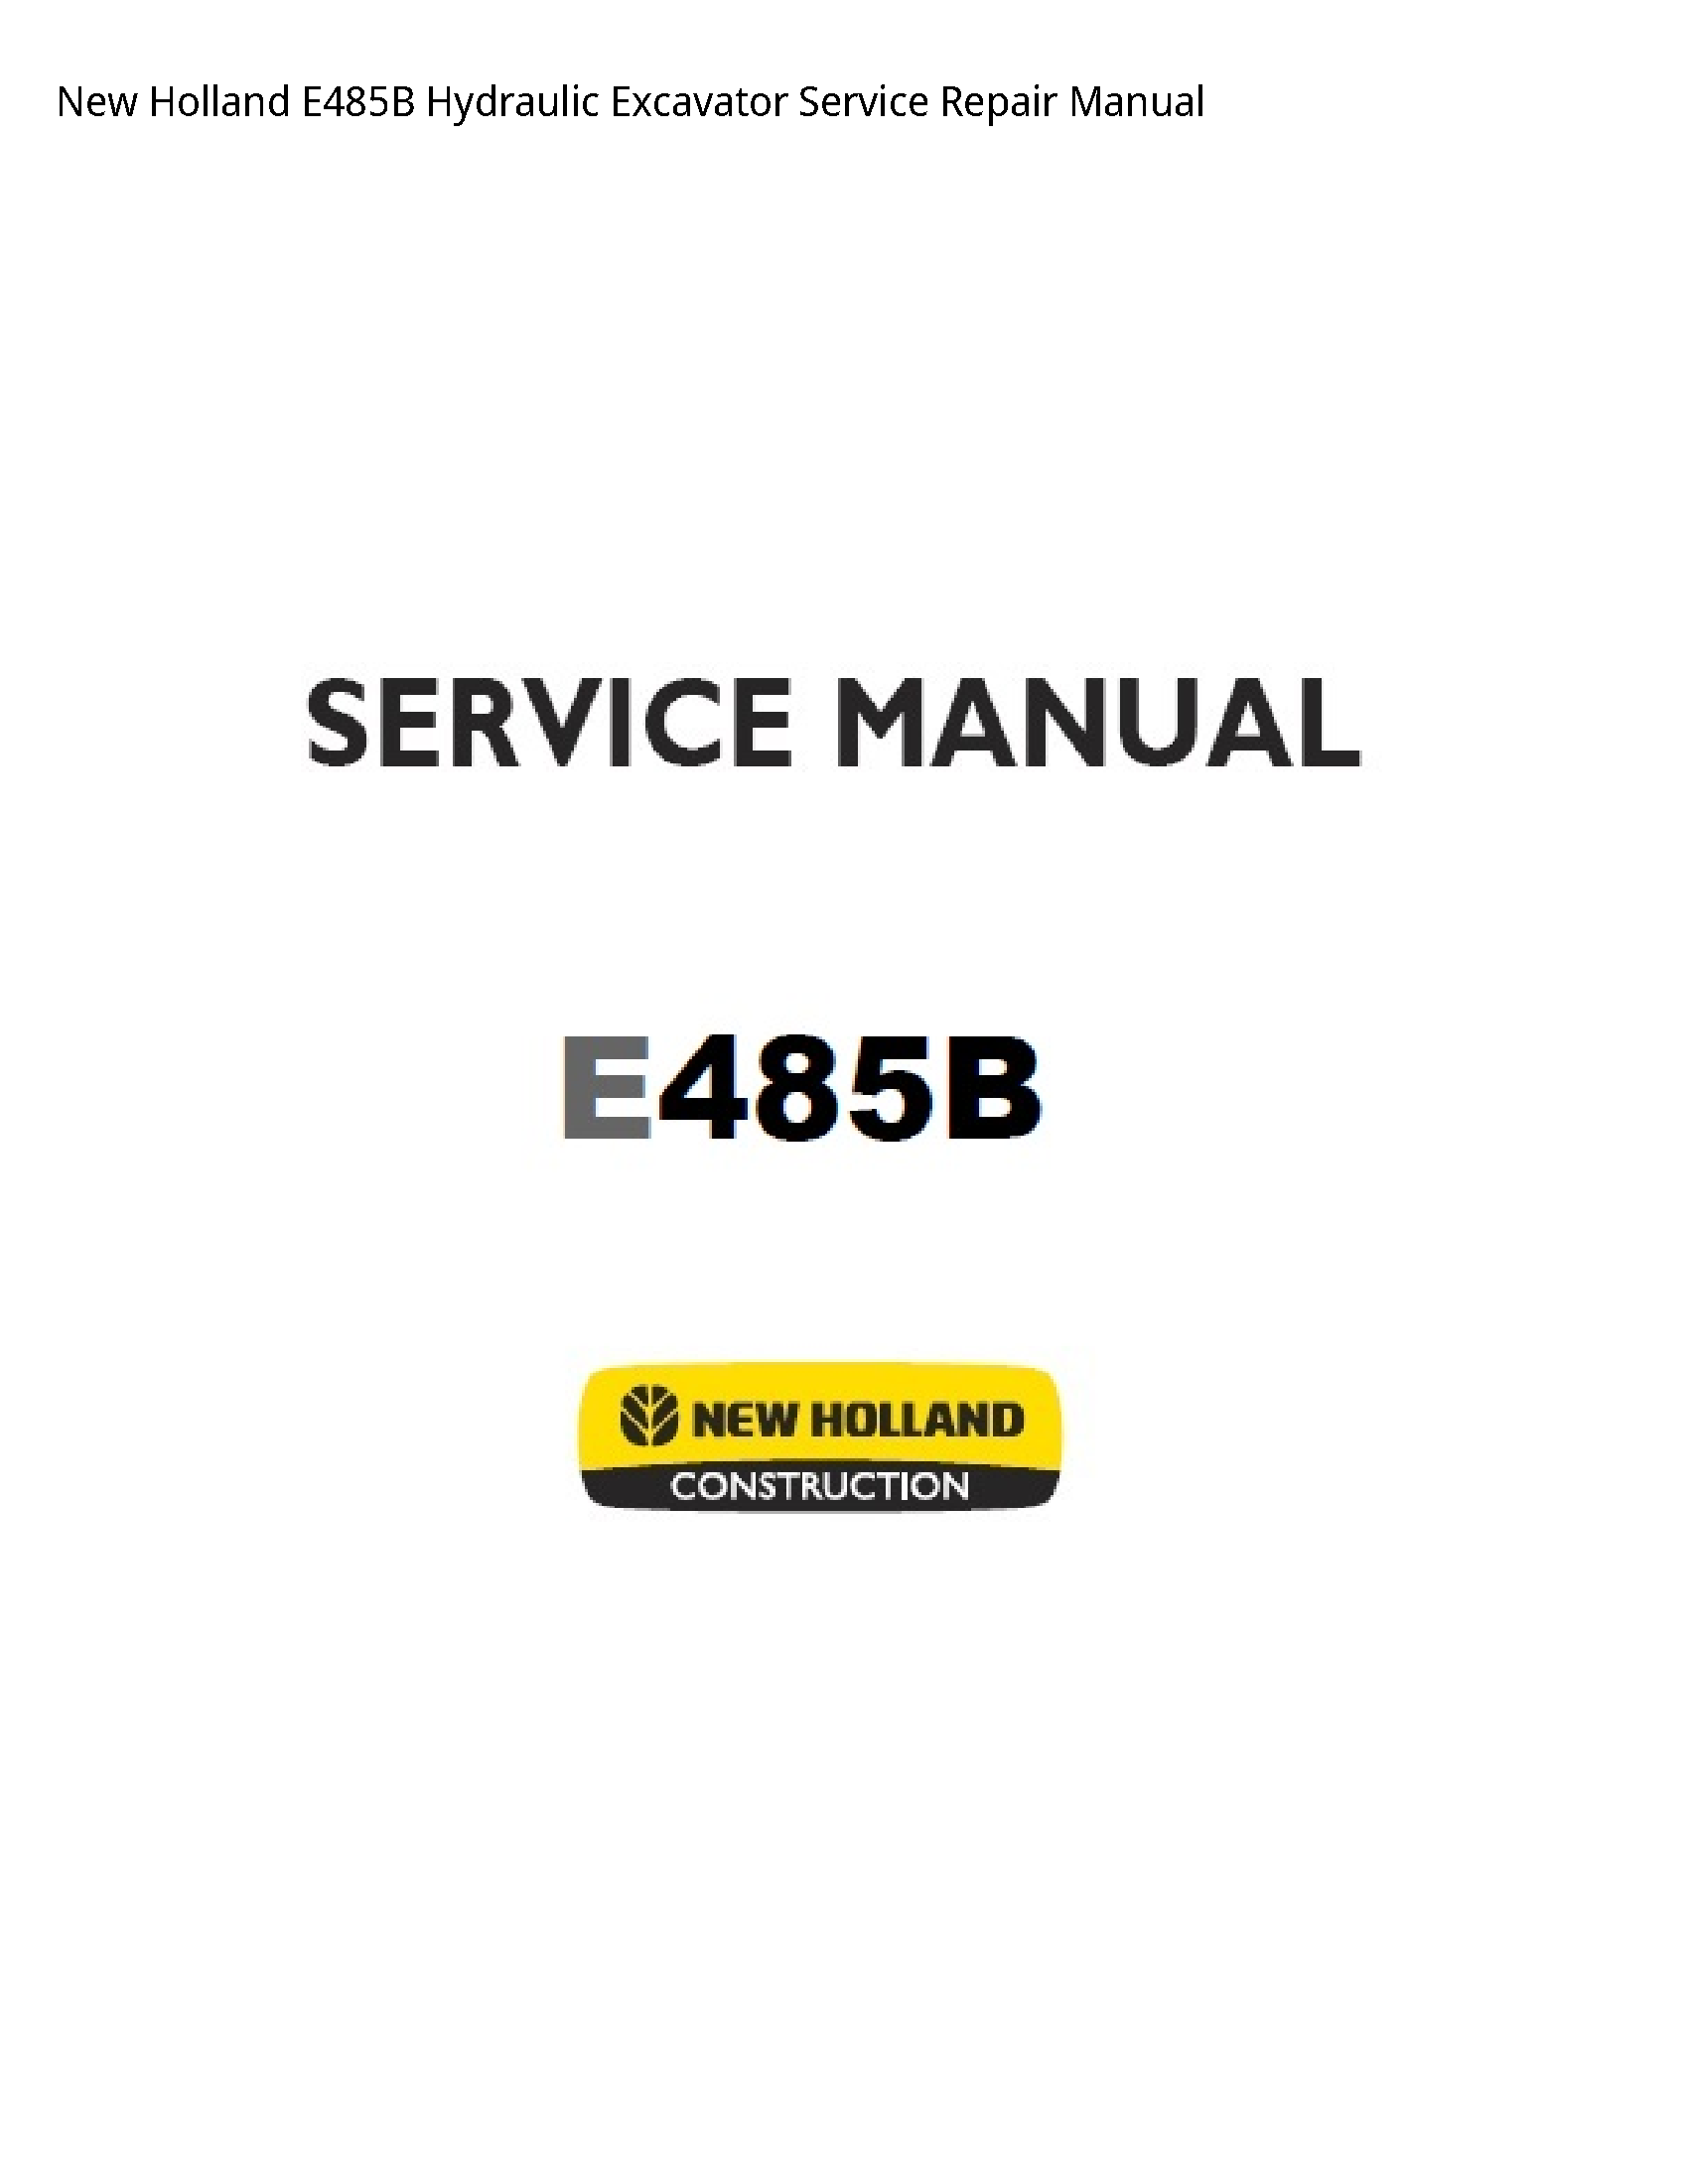 New Holland E485B Hydraulic Excavator manual